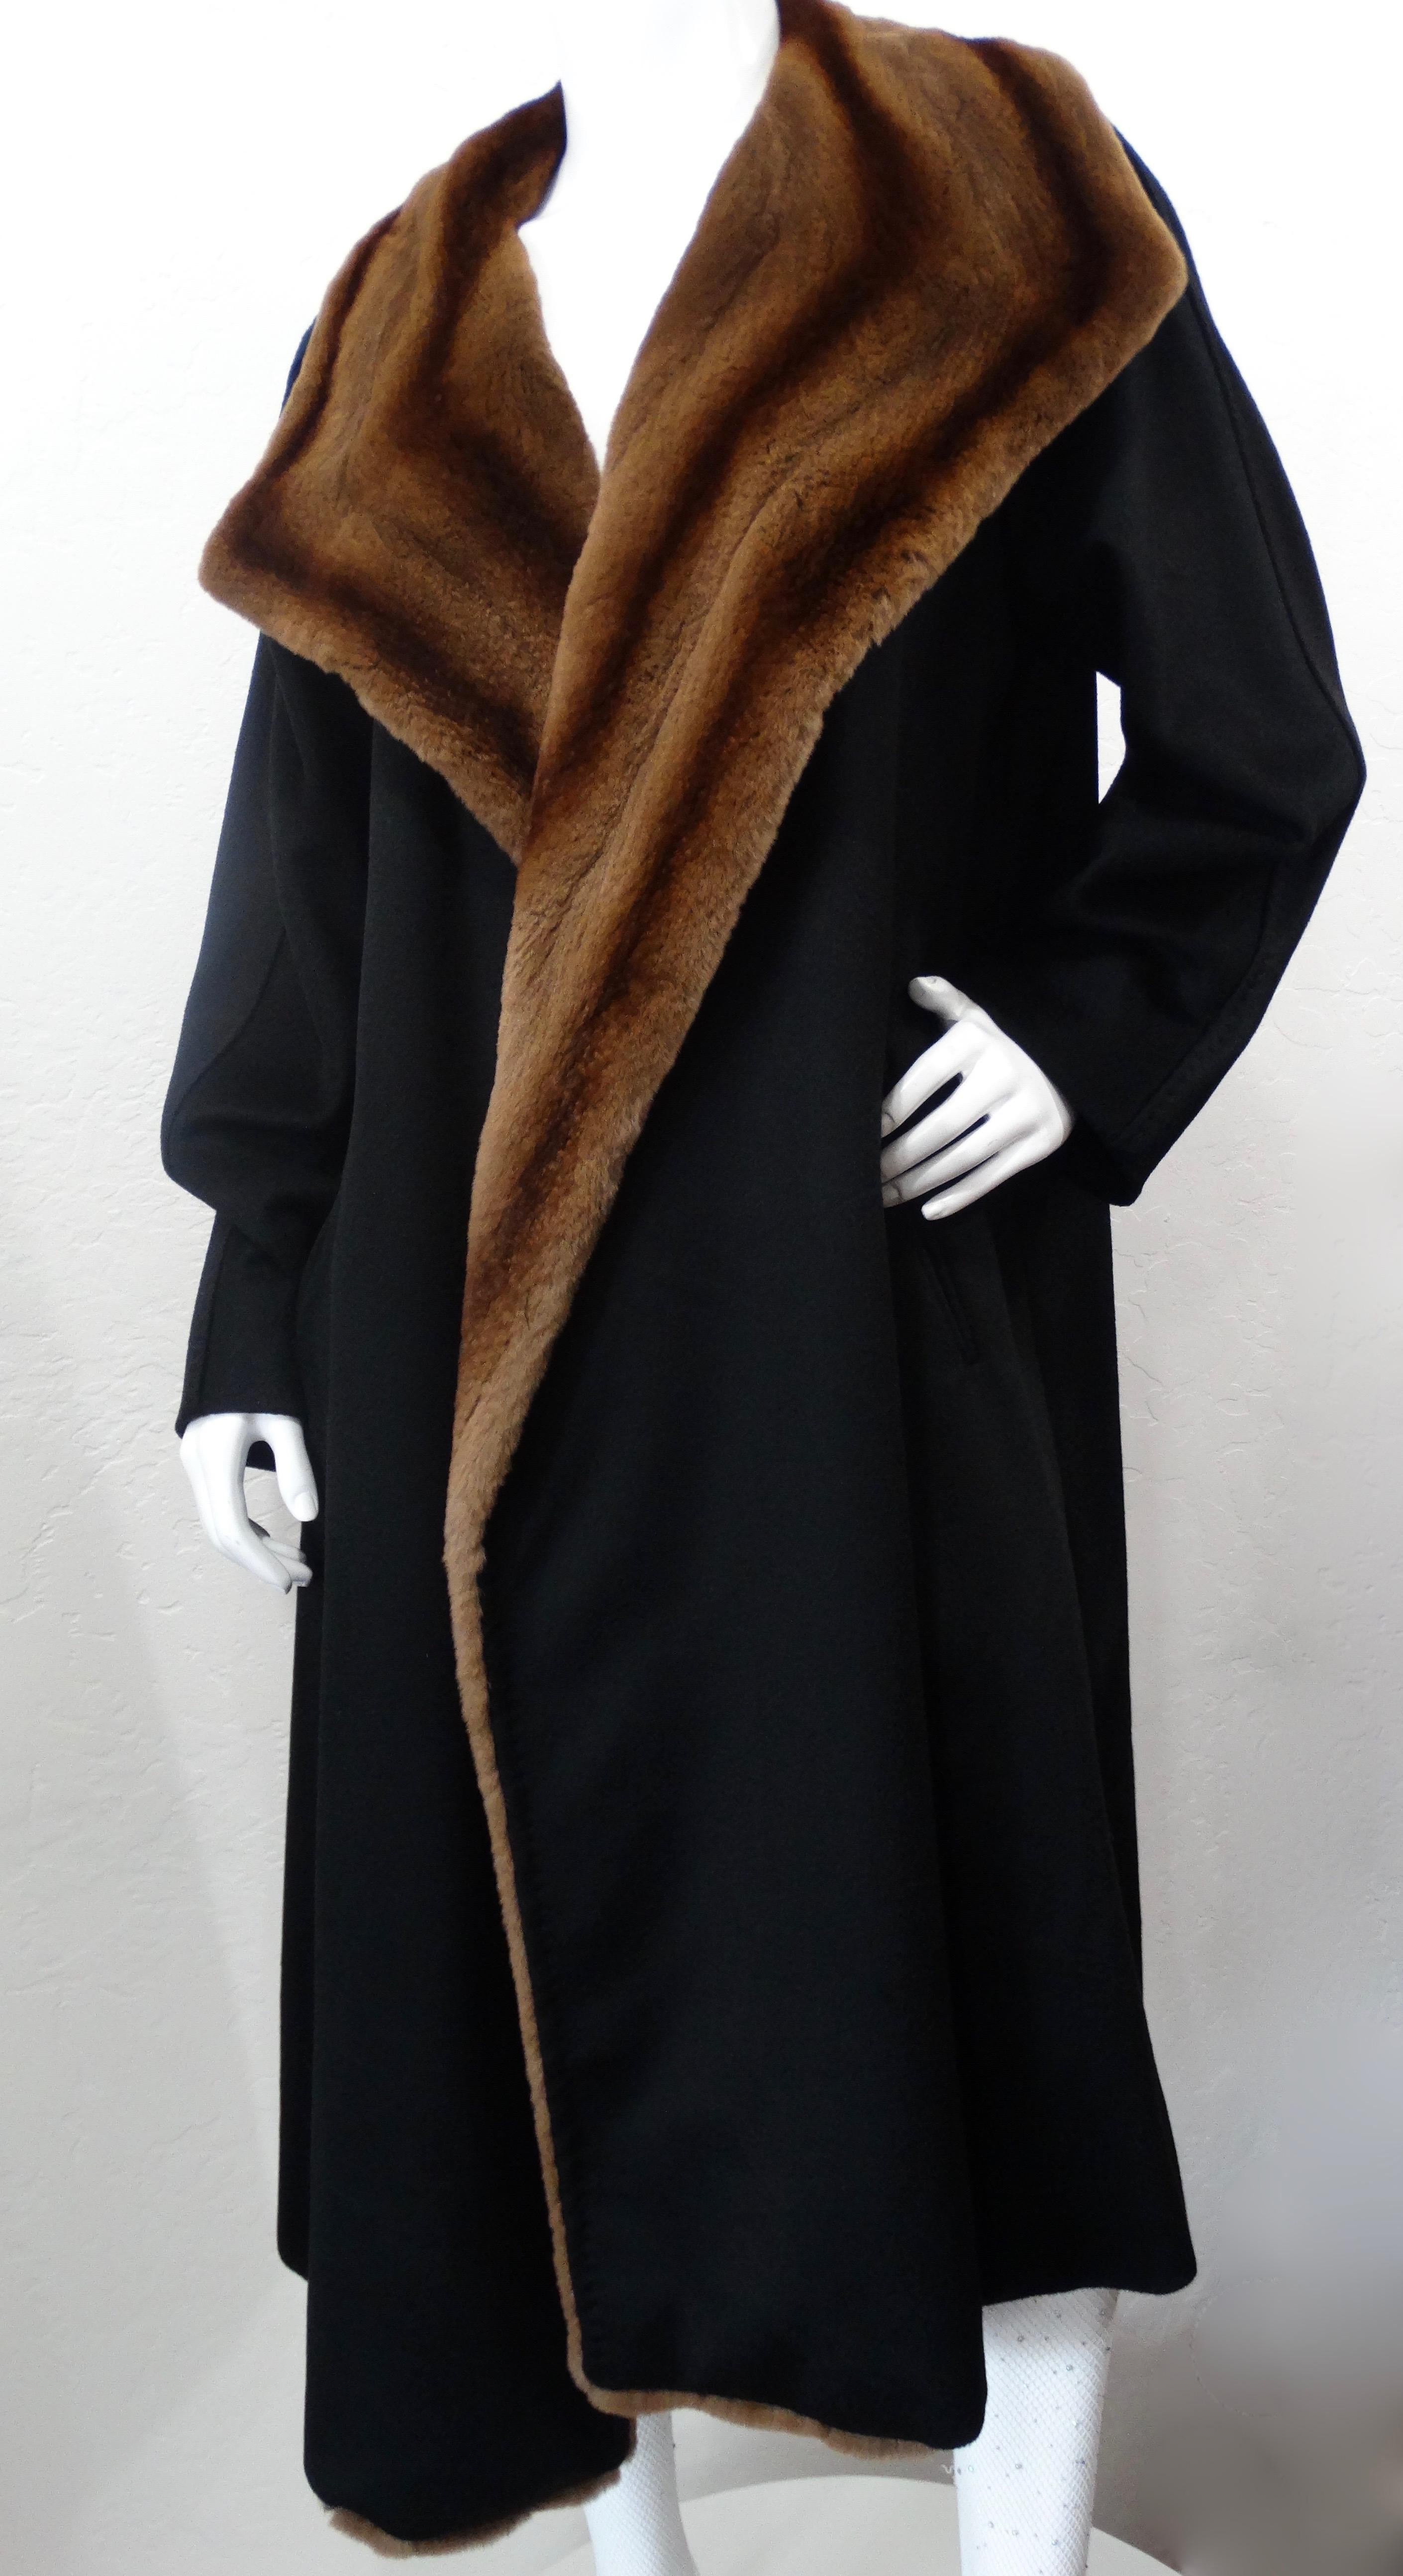  MaxMara Late 20th Century Black Cashmere & Mink Fur Coat  5